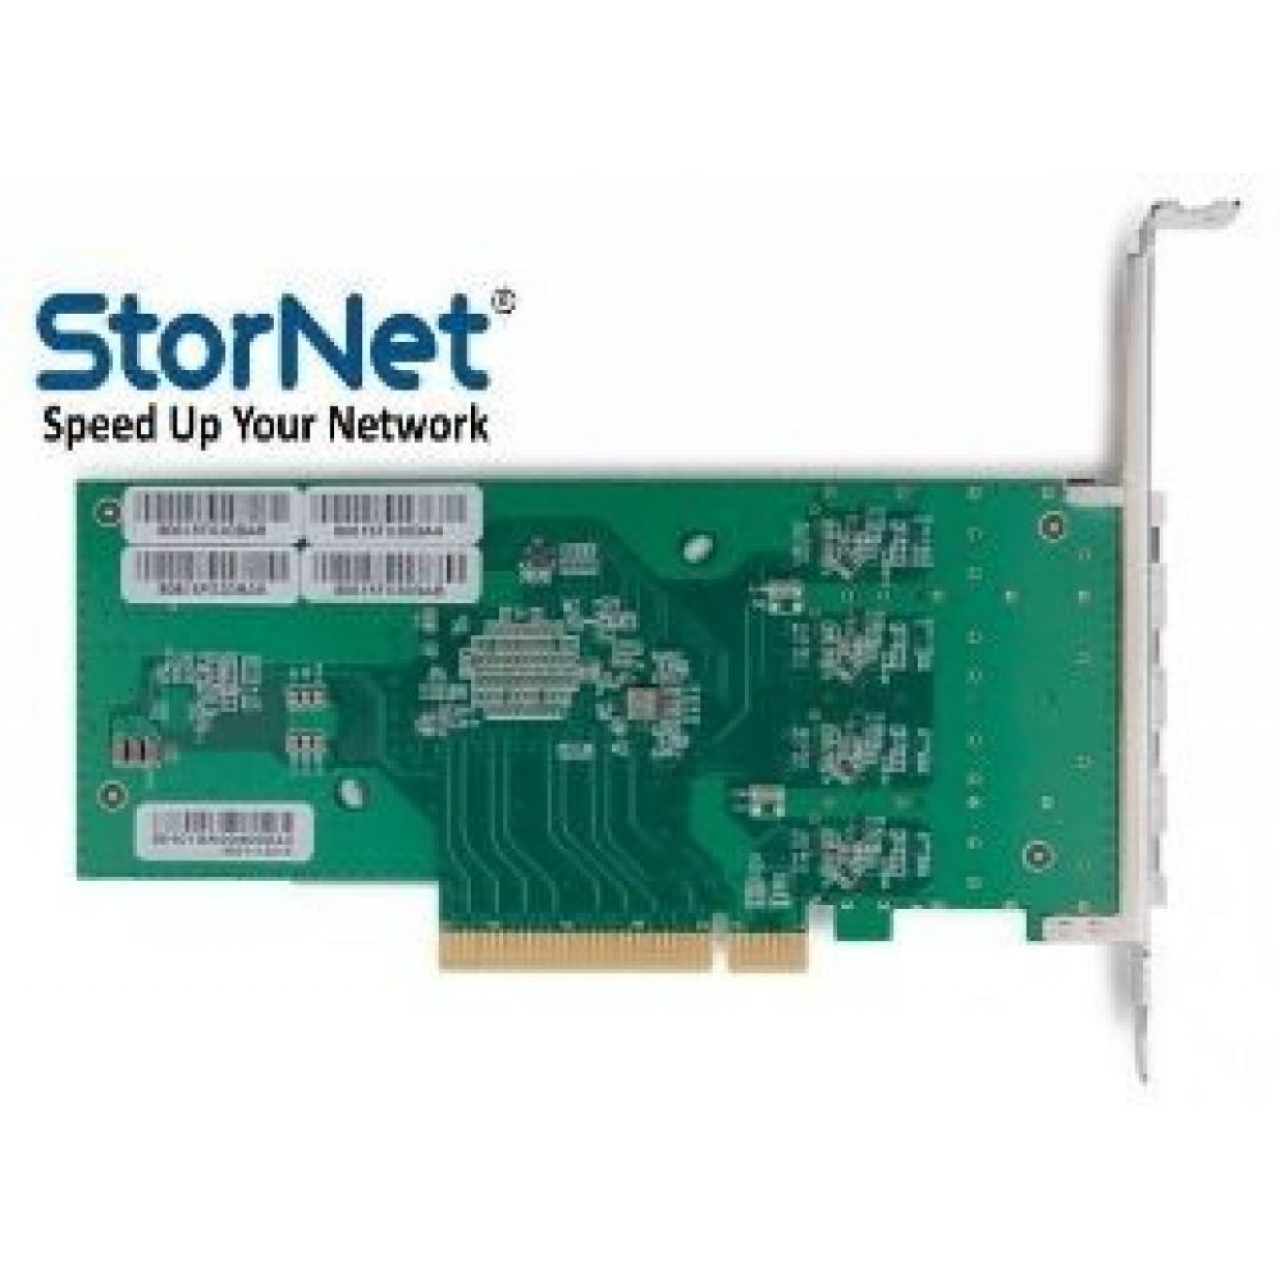 4 Port 10 GbE intel Fiber Ethernet Kart Intel X710-DA4